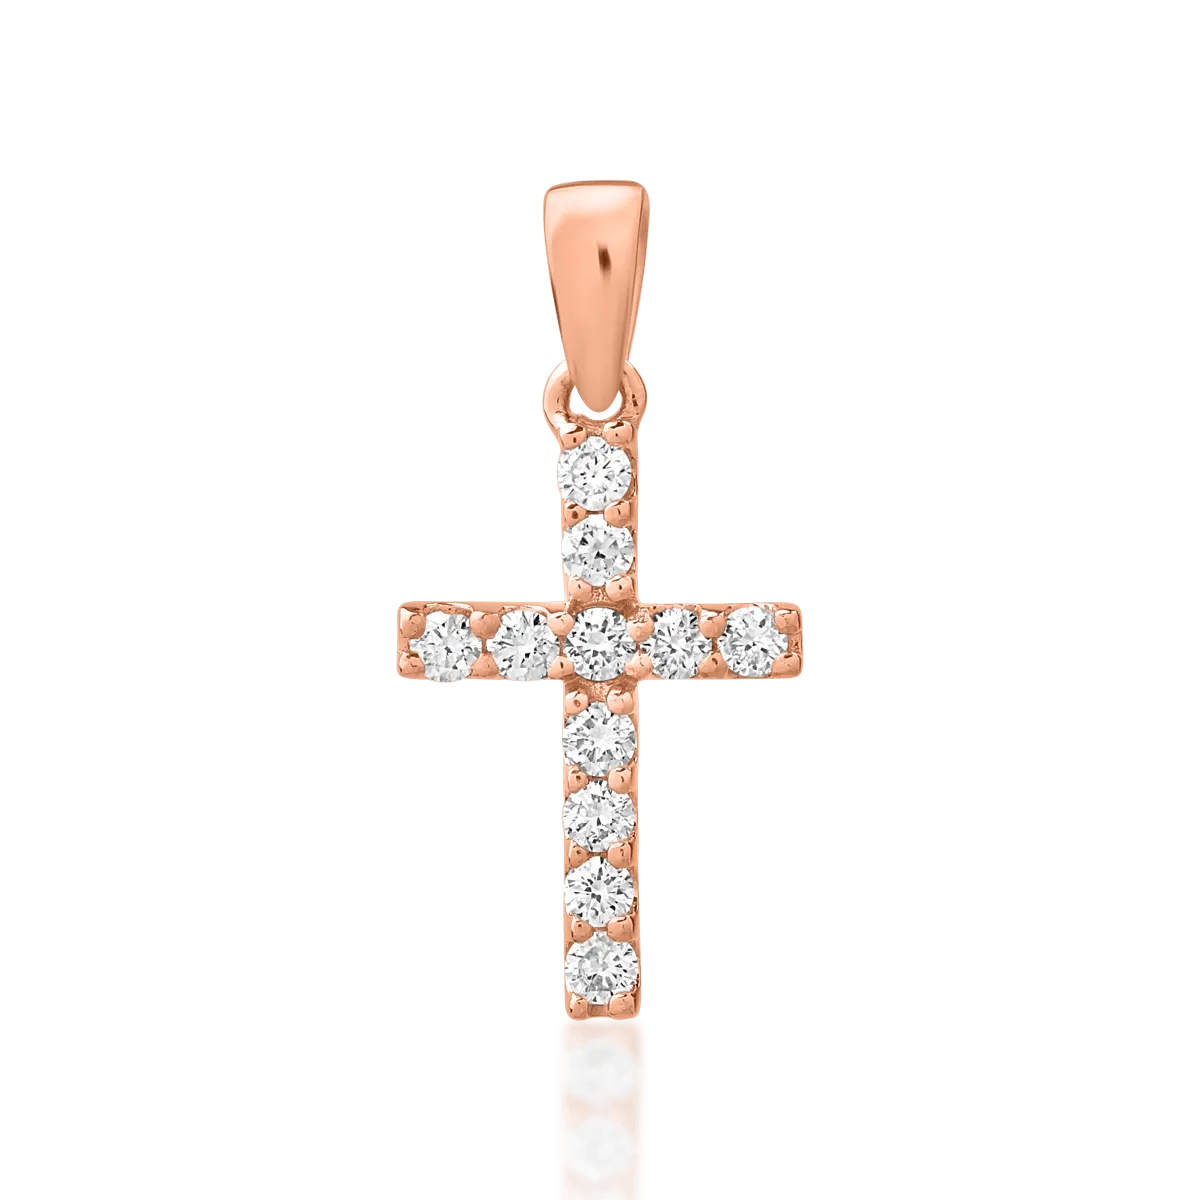 18K rose gold cross pendant with diamonds of 0.2ct